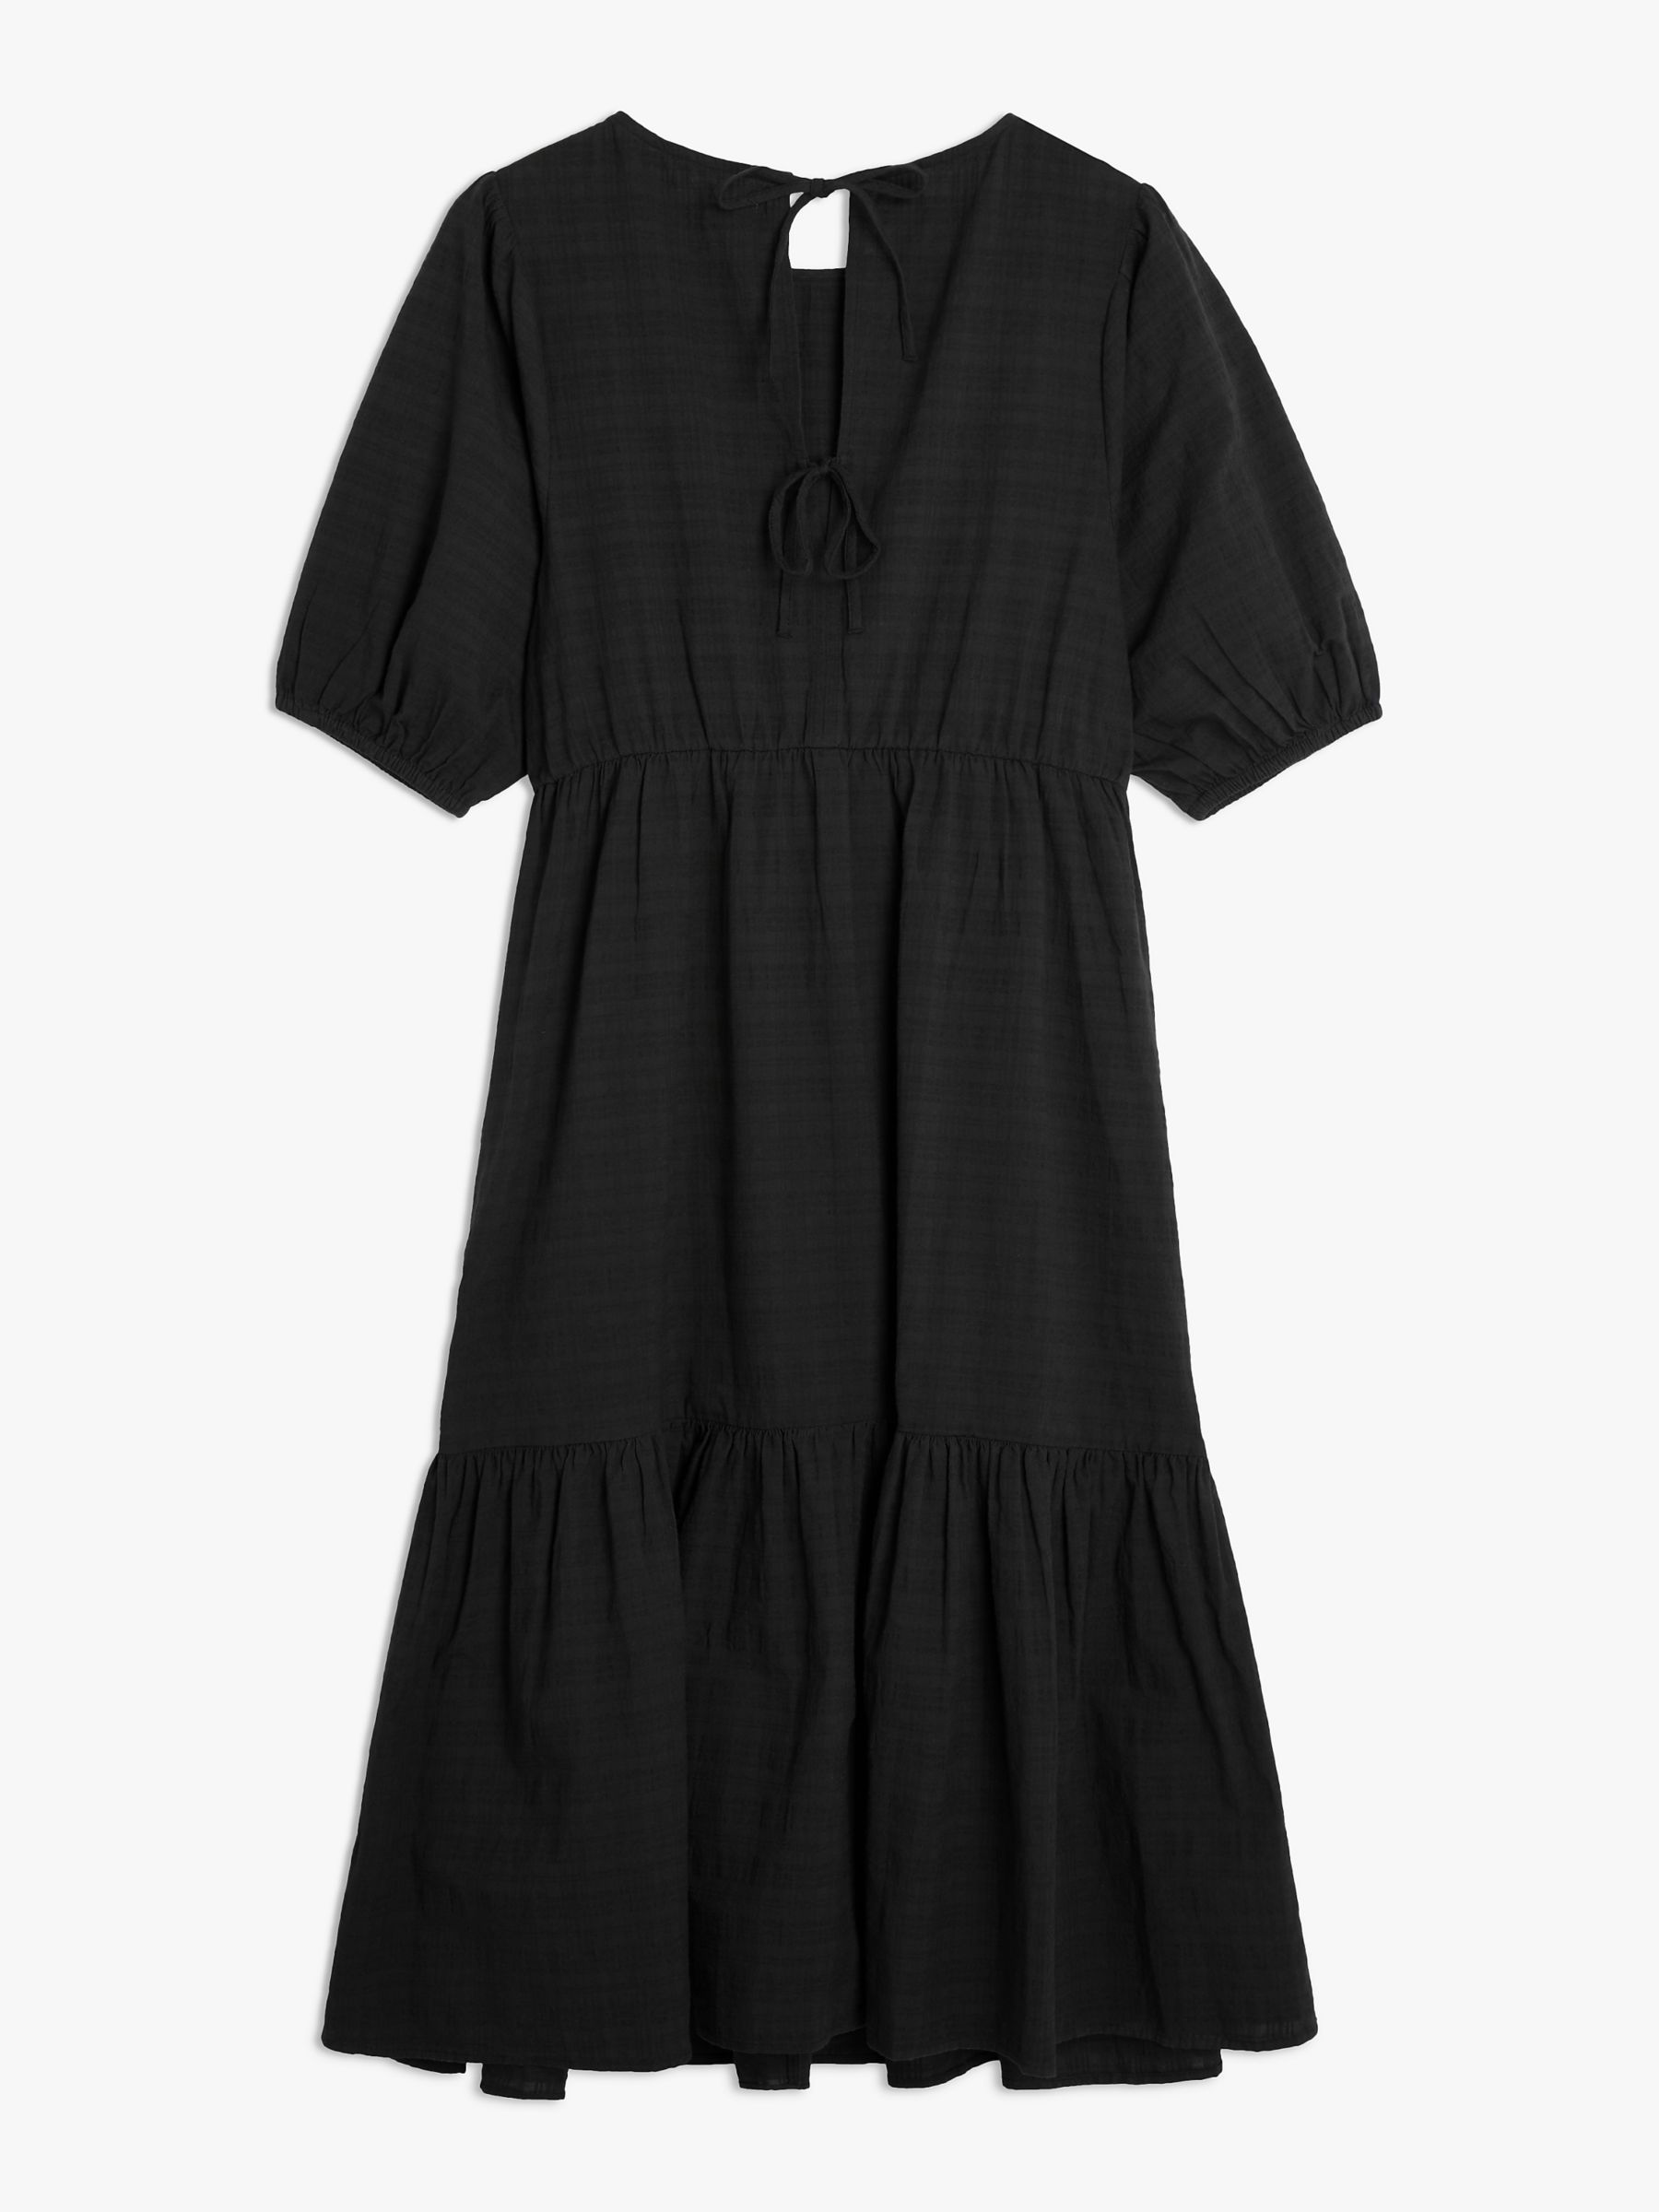 John Lewis ANYDAY Textured Midi Smock Dress, Black, 6